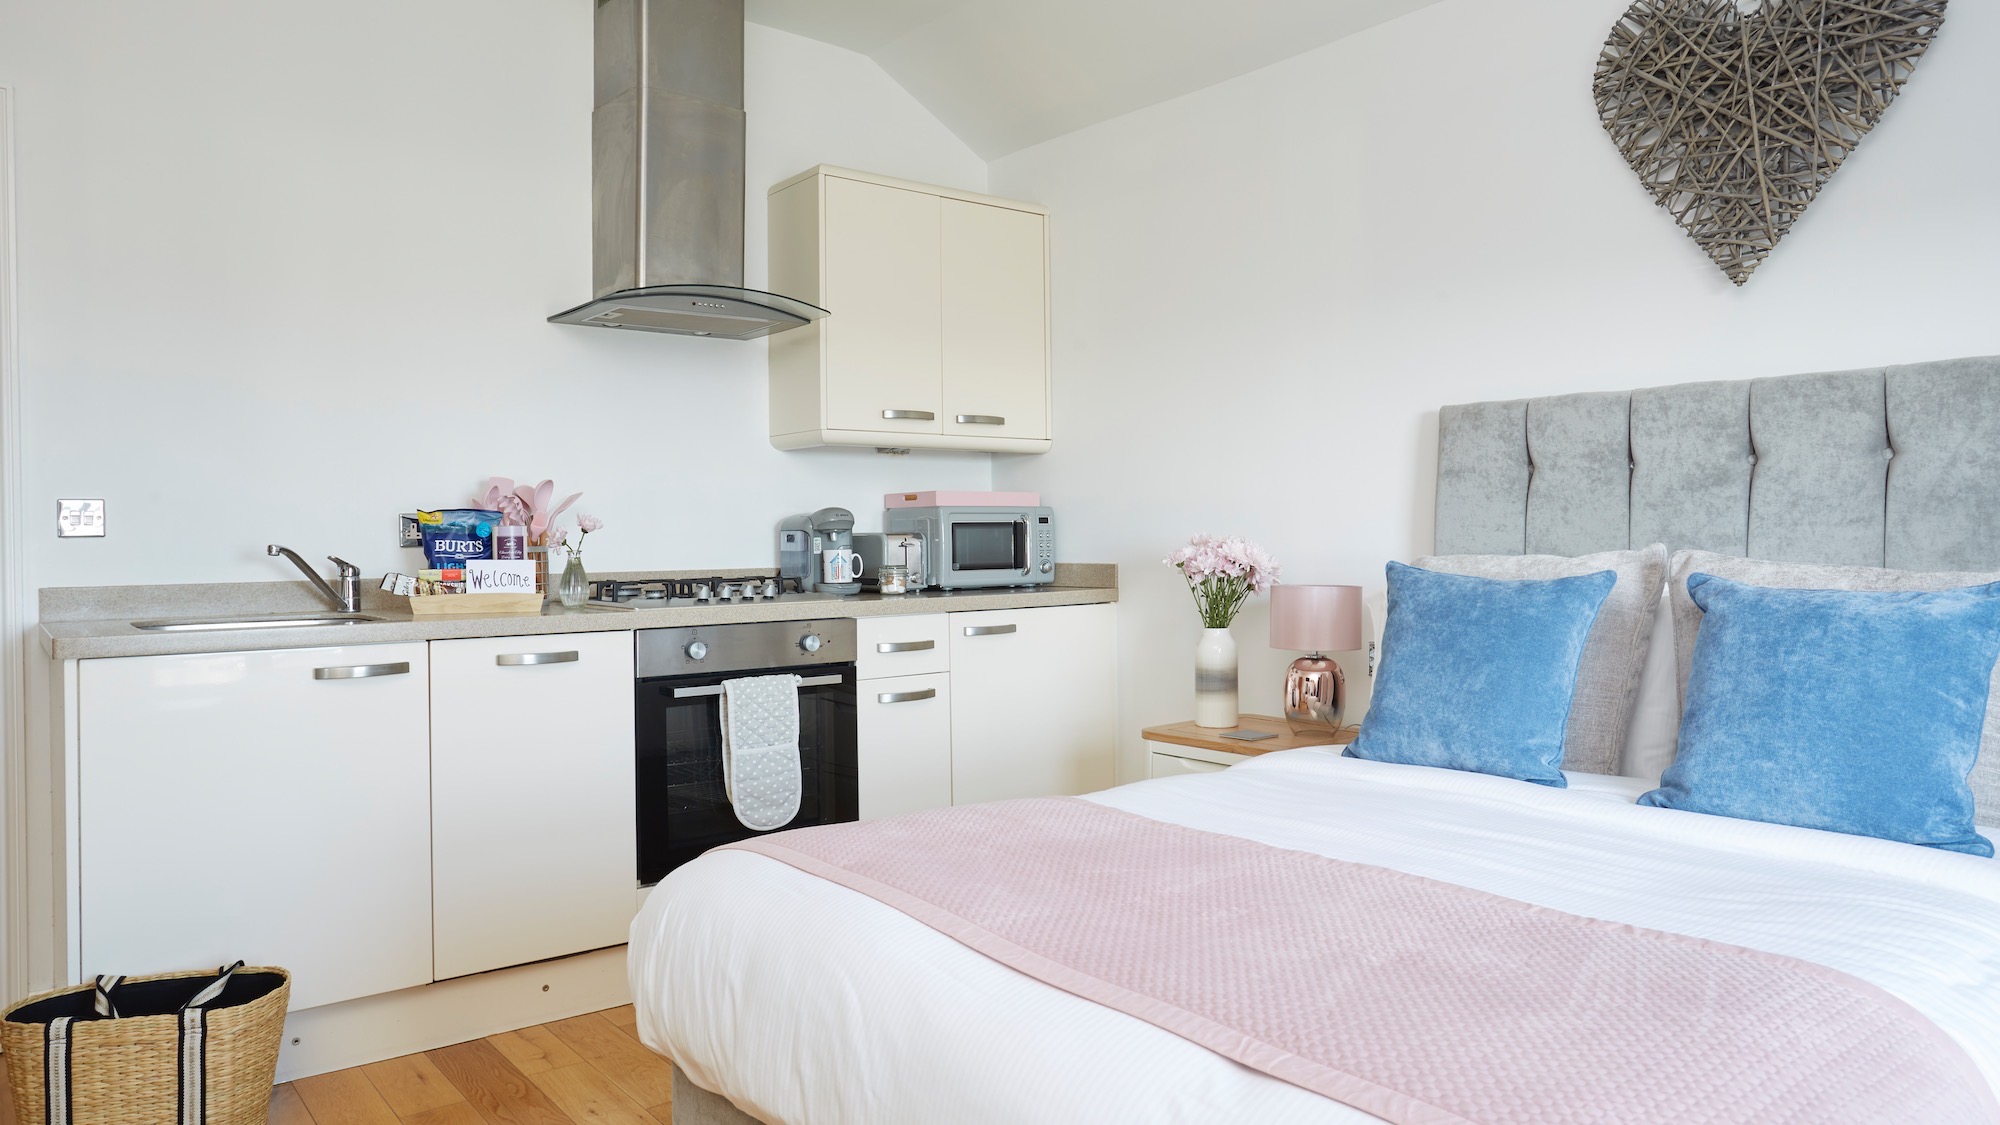 Beatrice Studio Apartment, Bed and Kitchen, Shanklin Villa Aparthotel, Isle of Wight